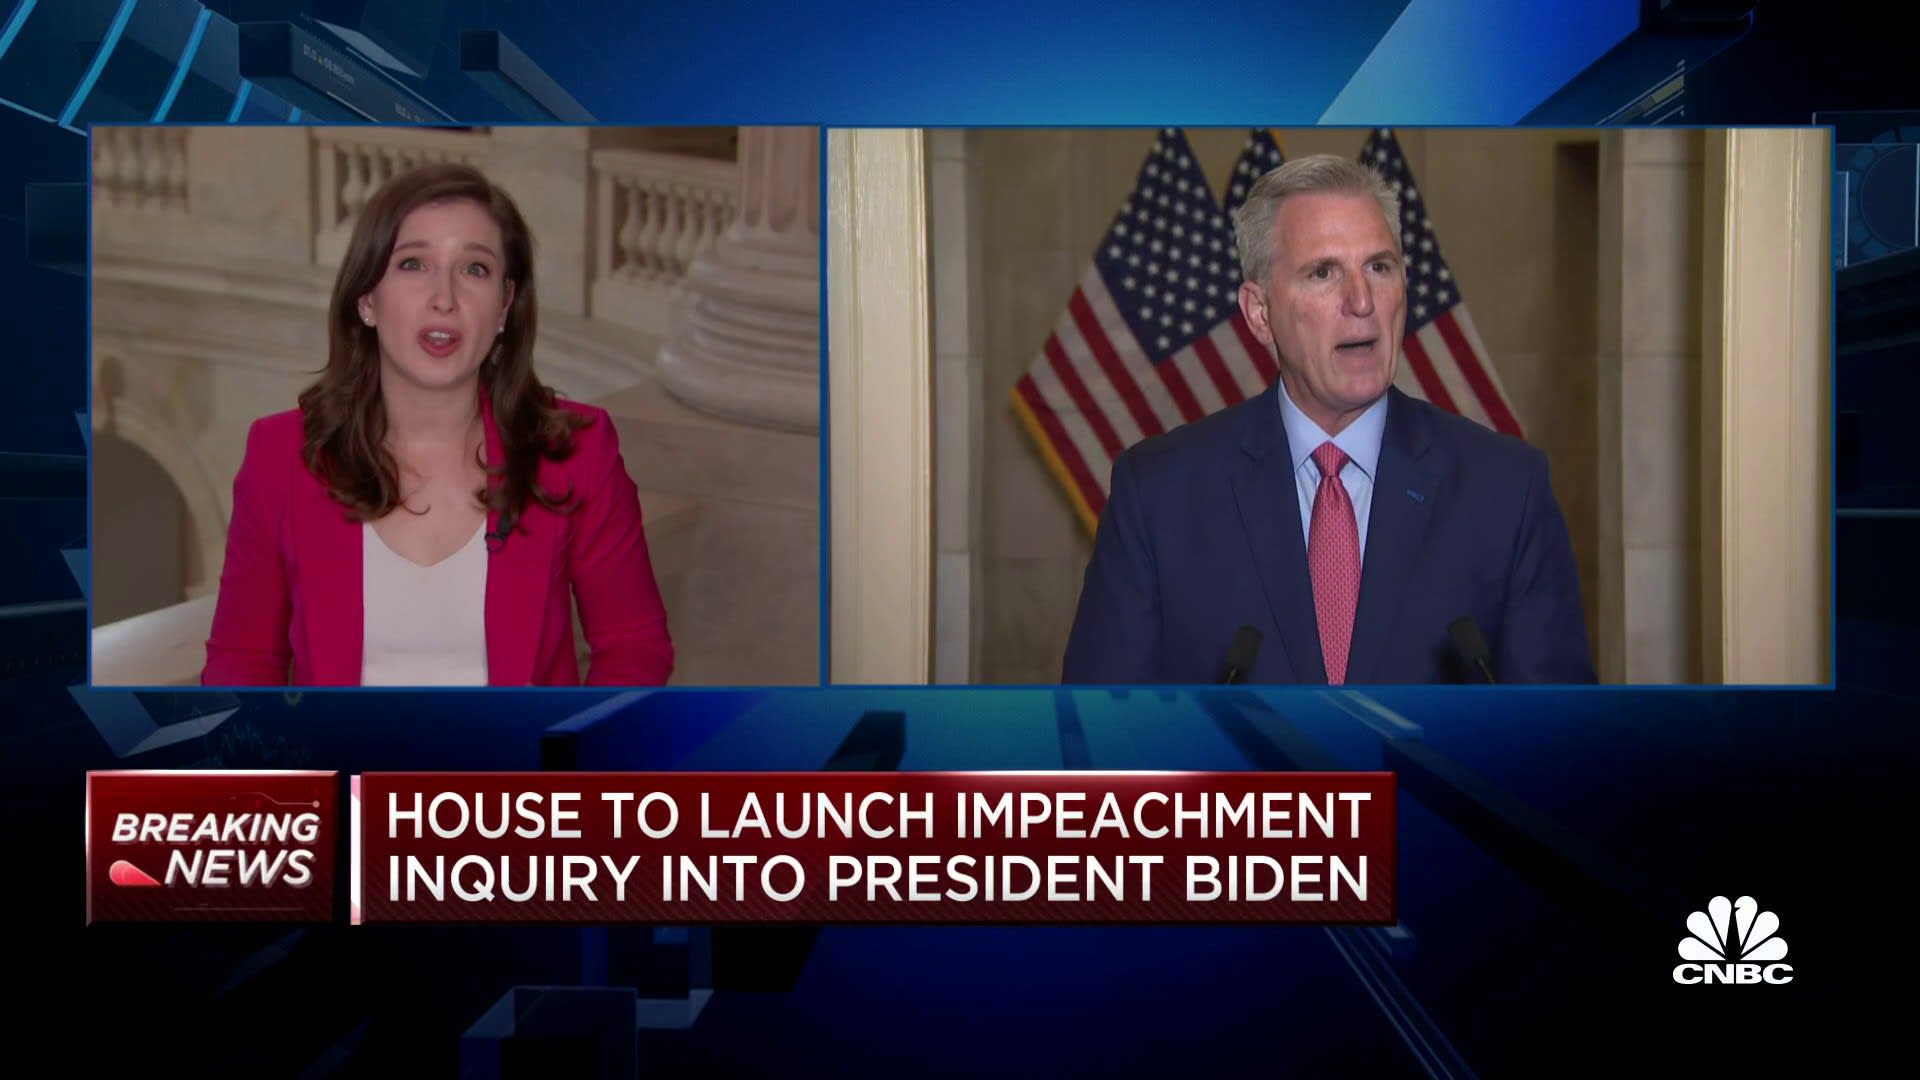 House Speaker Kevin McCarthy endorses impeachment inquiry into President Biden